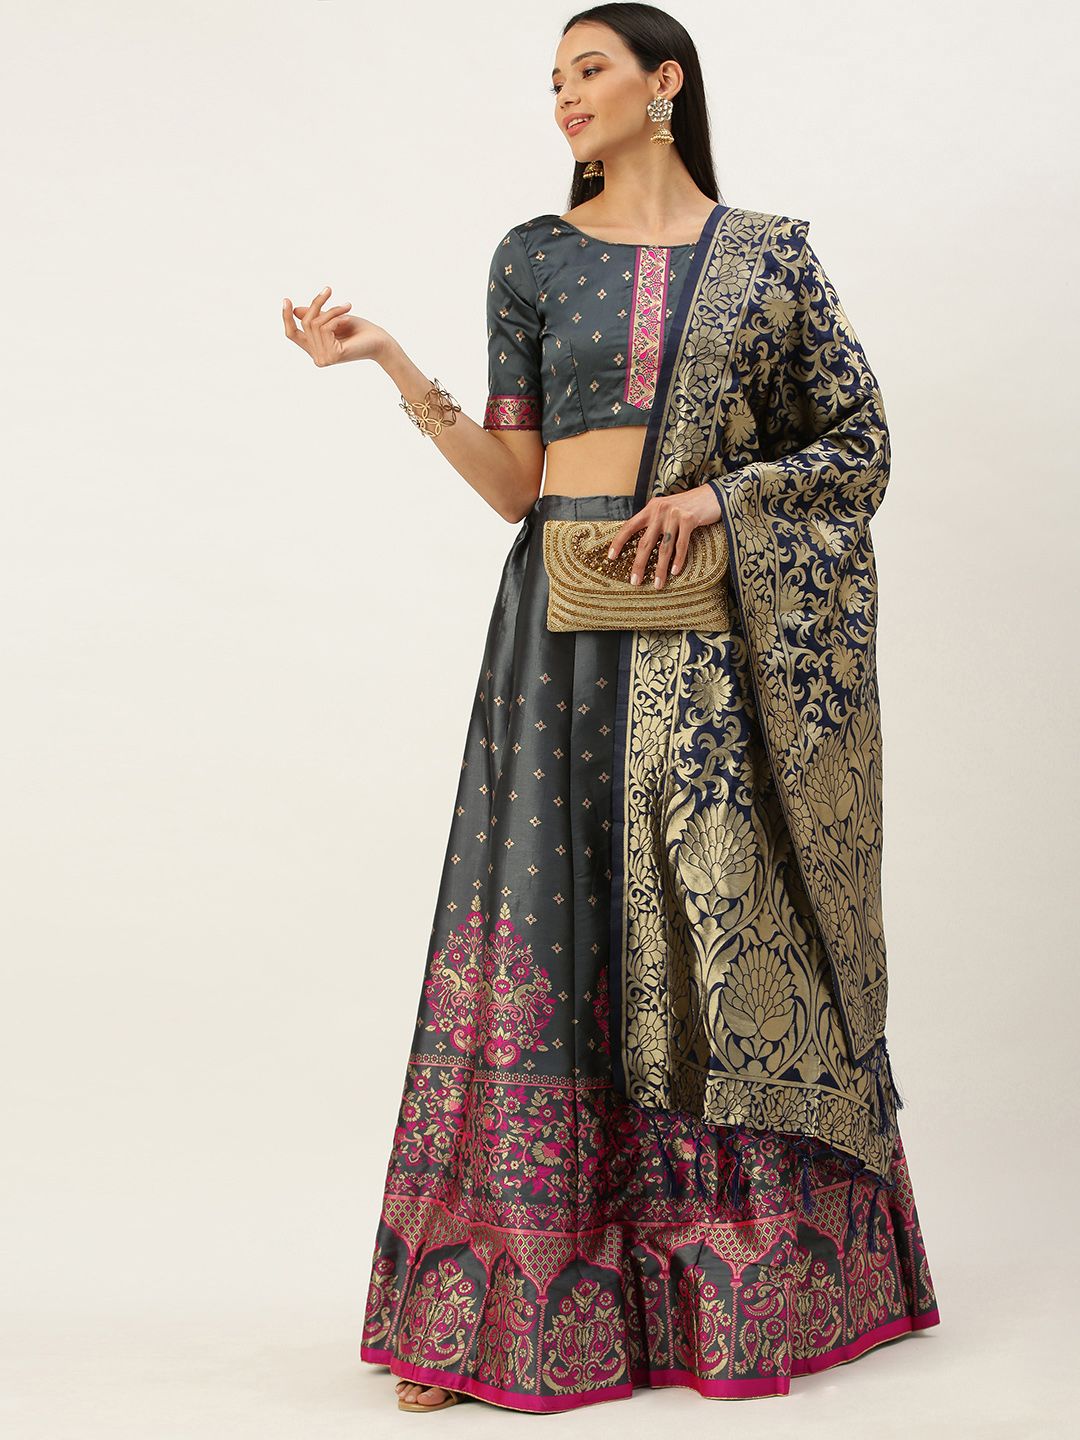 Mameraa Grey & Blue Woven Design Semi-Stitched Lehenga Choli Price in India